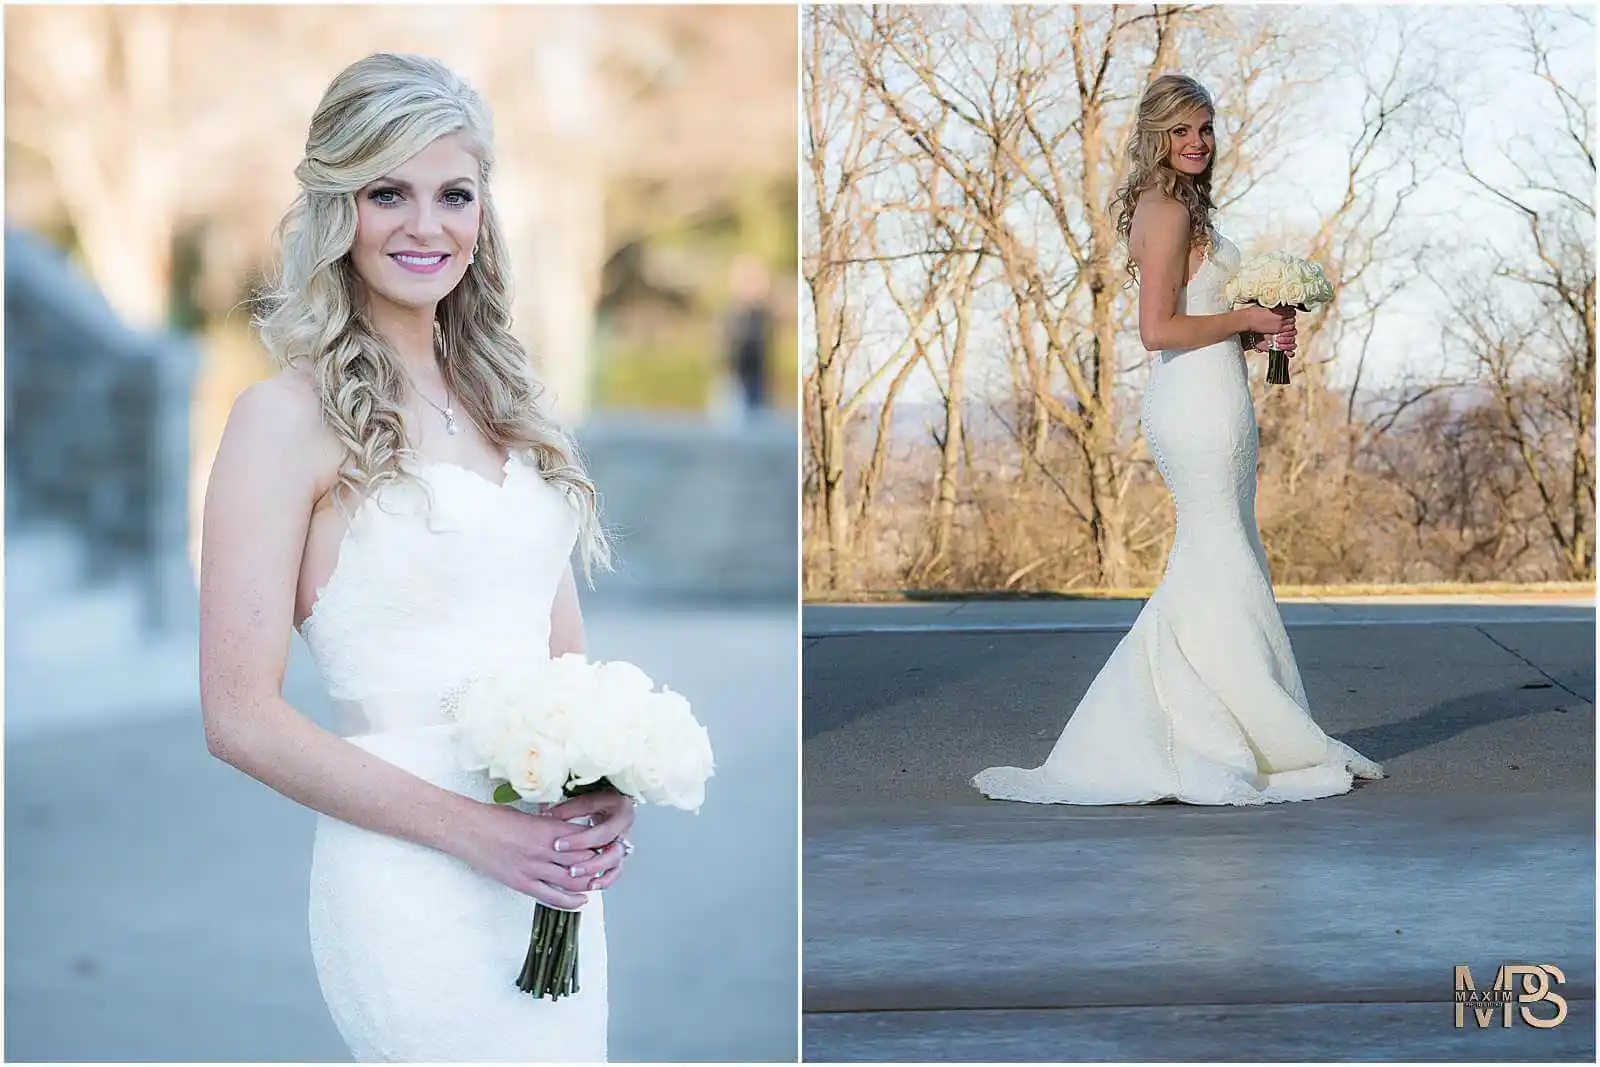 Graceful blonde bride with white bouquet in Cincinnati park.